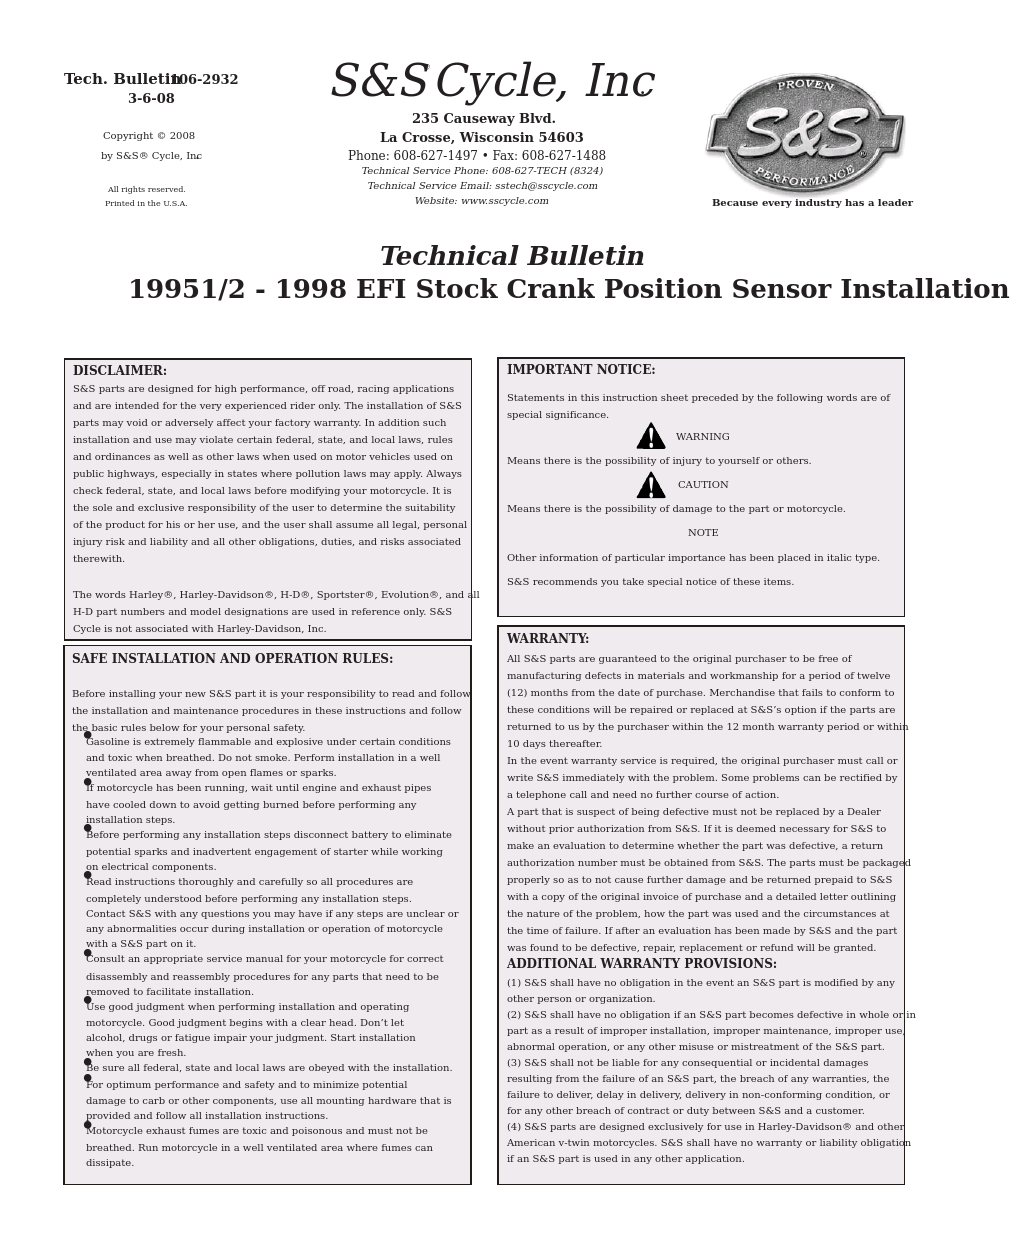 EFI Stock Crank Position Sensor 1995 1/2 - 1998